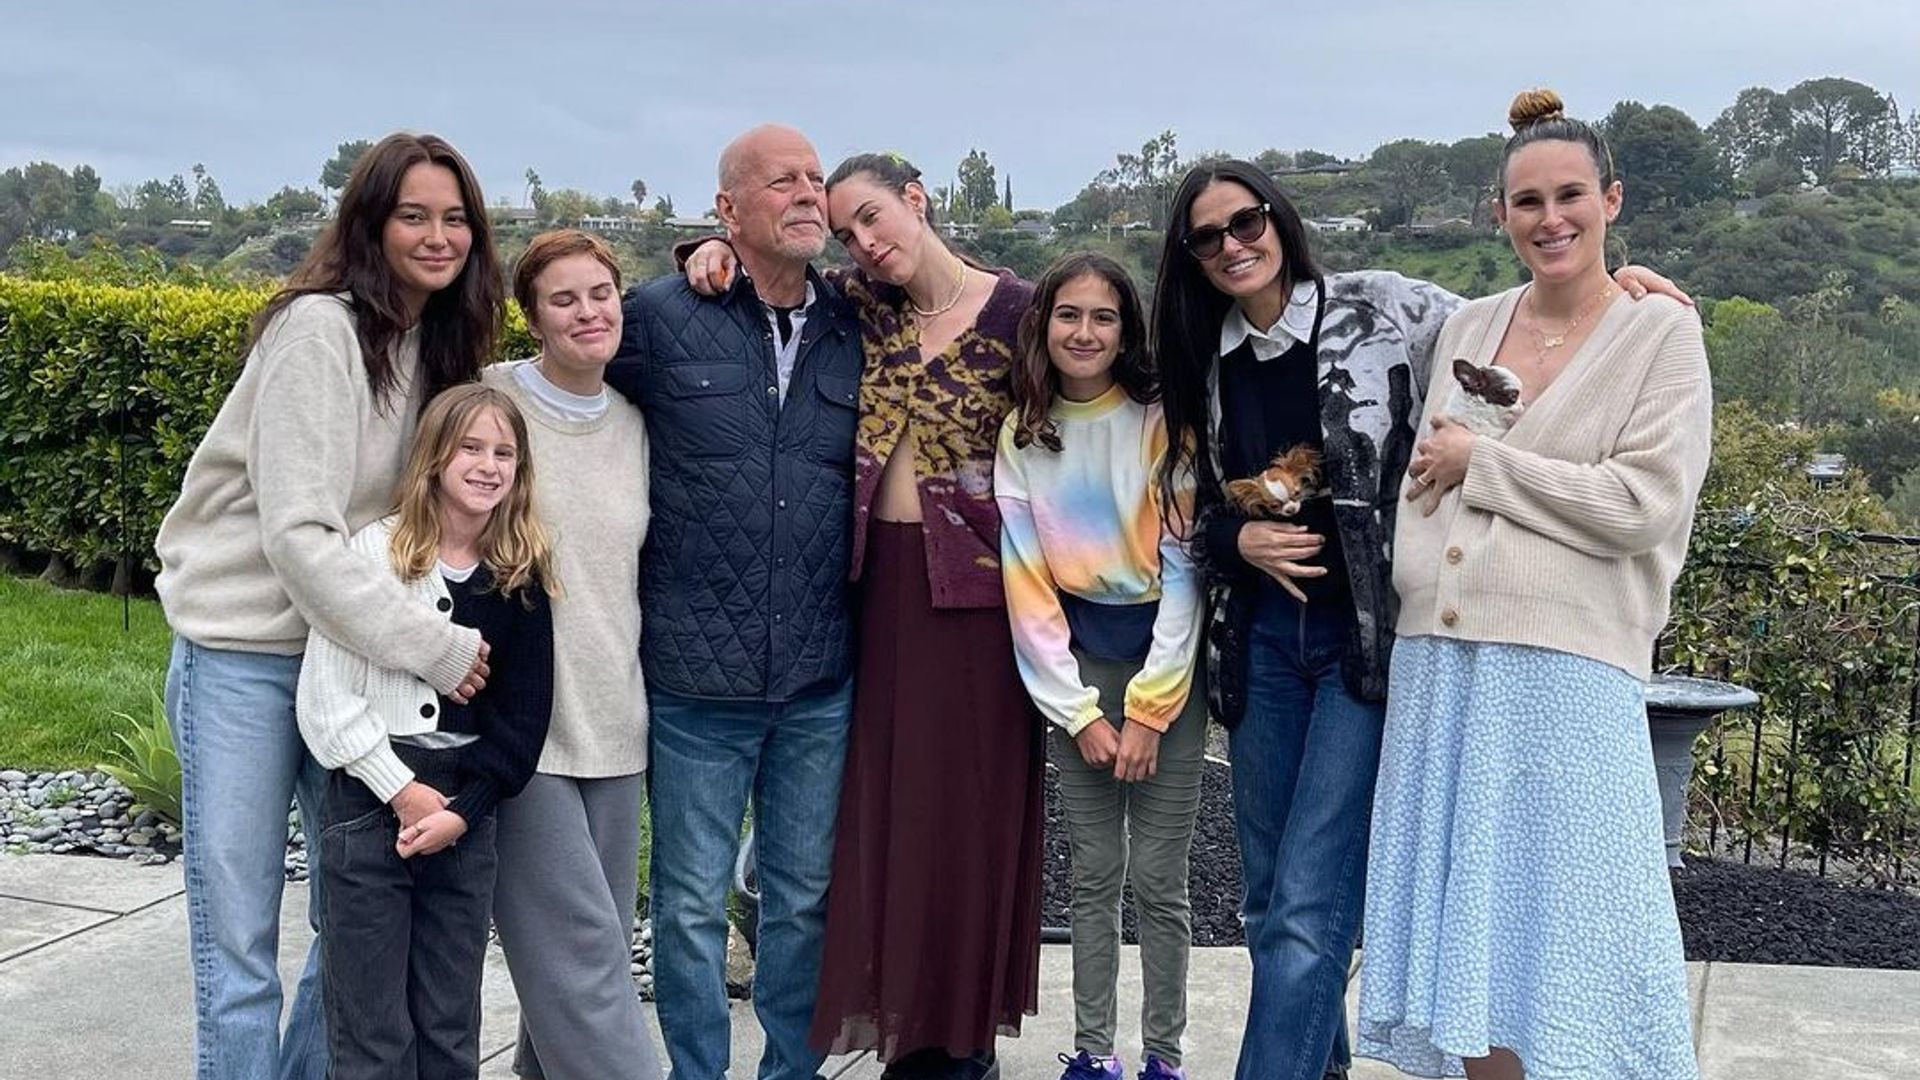 Bruce Willis and Demi Moore's blended family